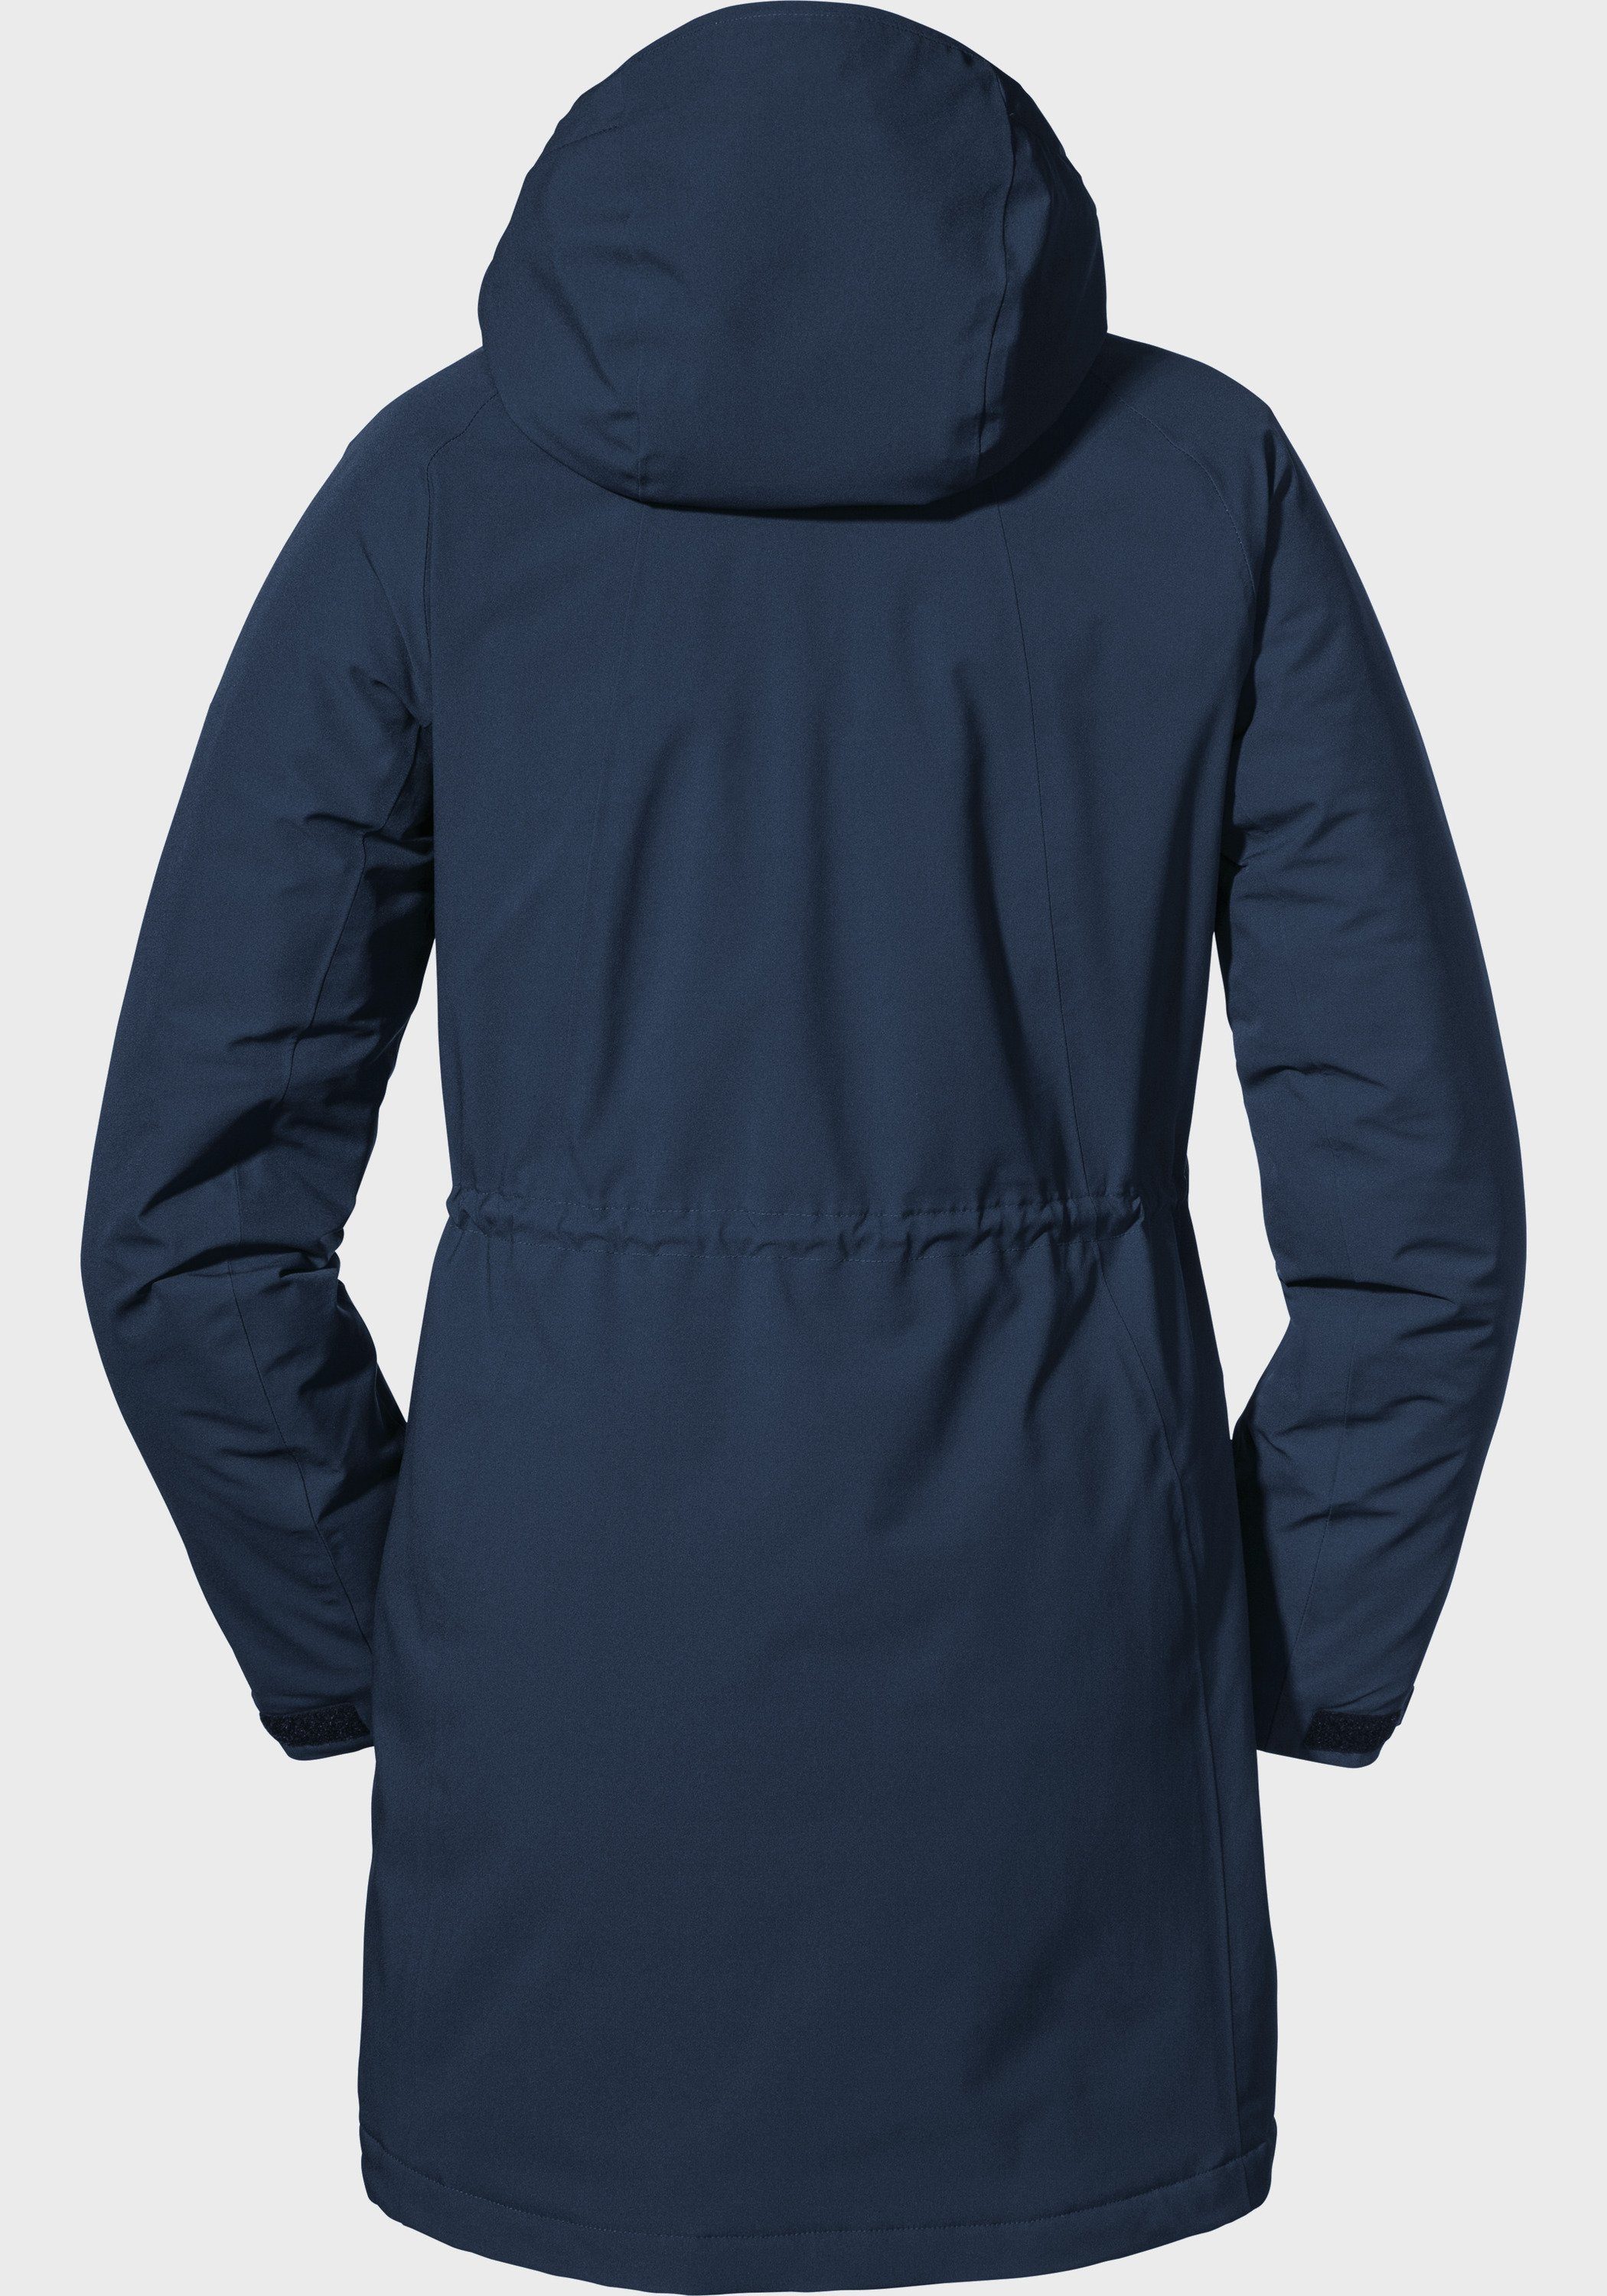 Outdoorjacke Jacket L blau Schöffel Ins. Bastianisee